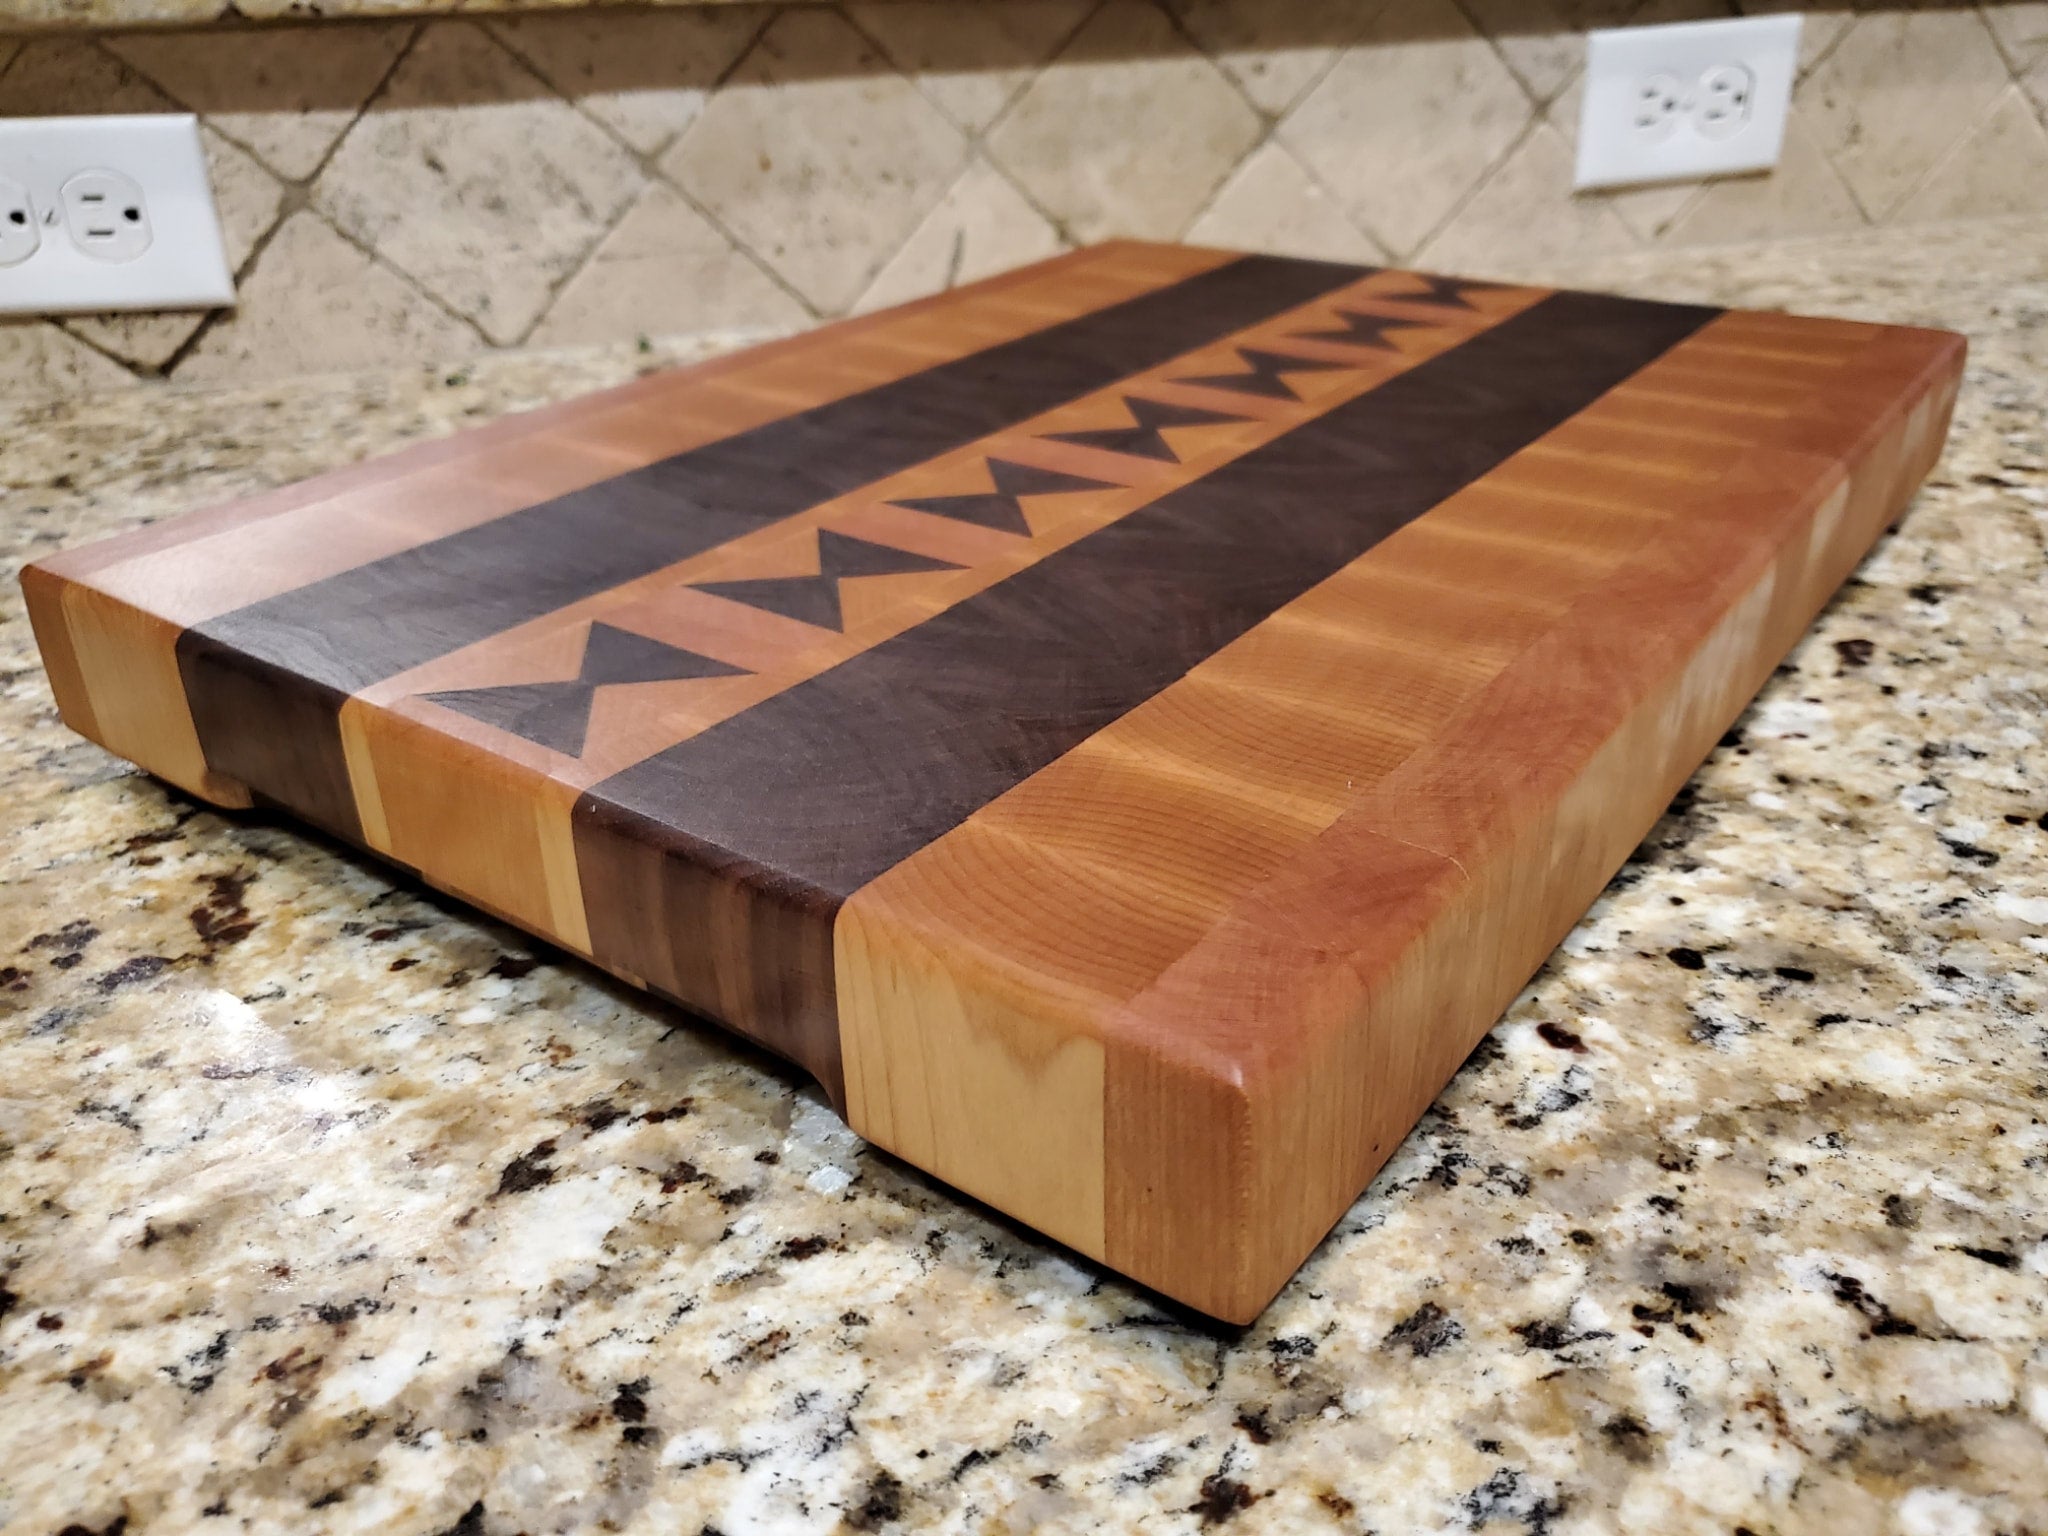 Walnut and Mesquite Cutting Board - Liveoak Woodworx LLC